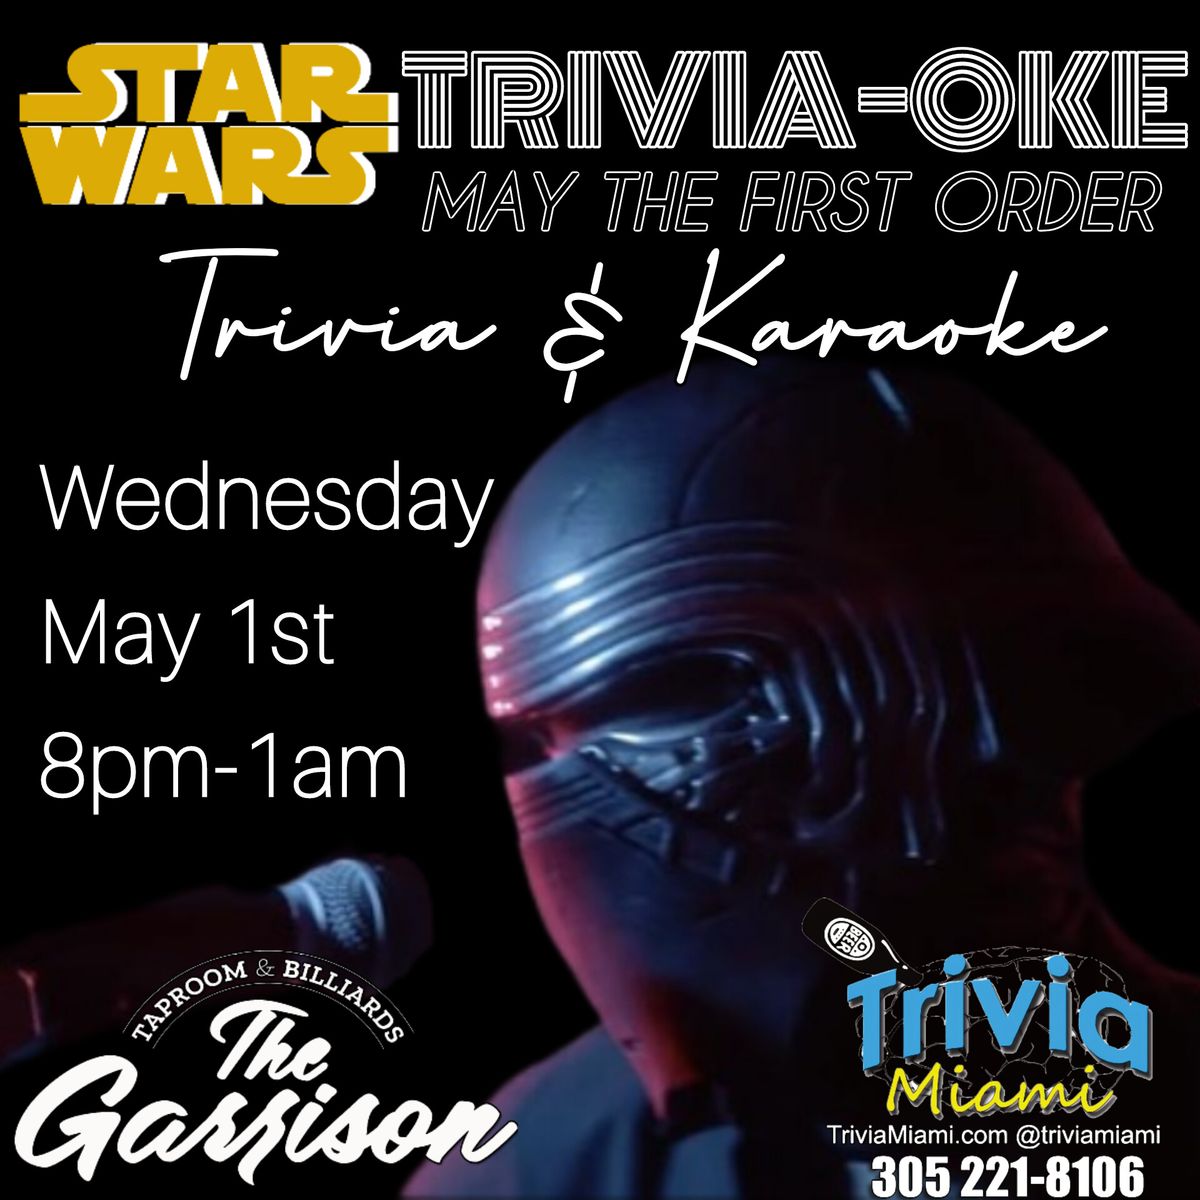 Star Wars Trivia-Oke(Trivia & Karaoke)